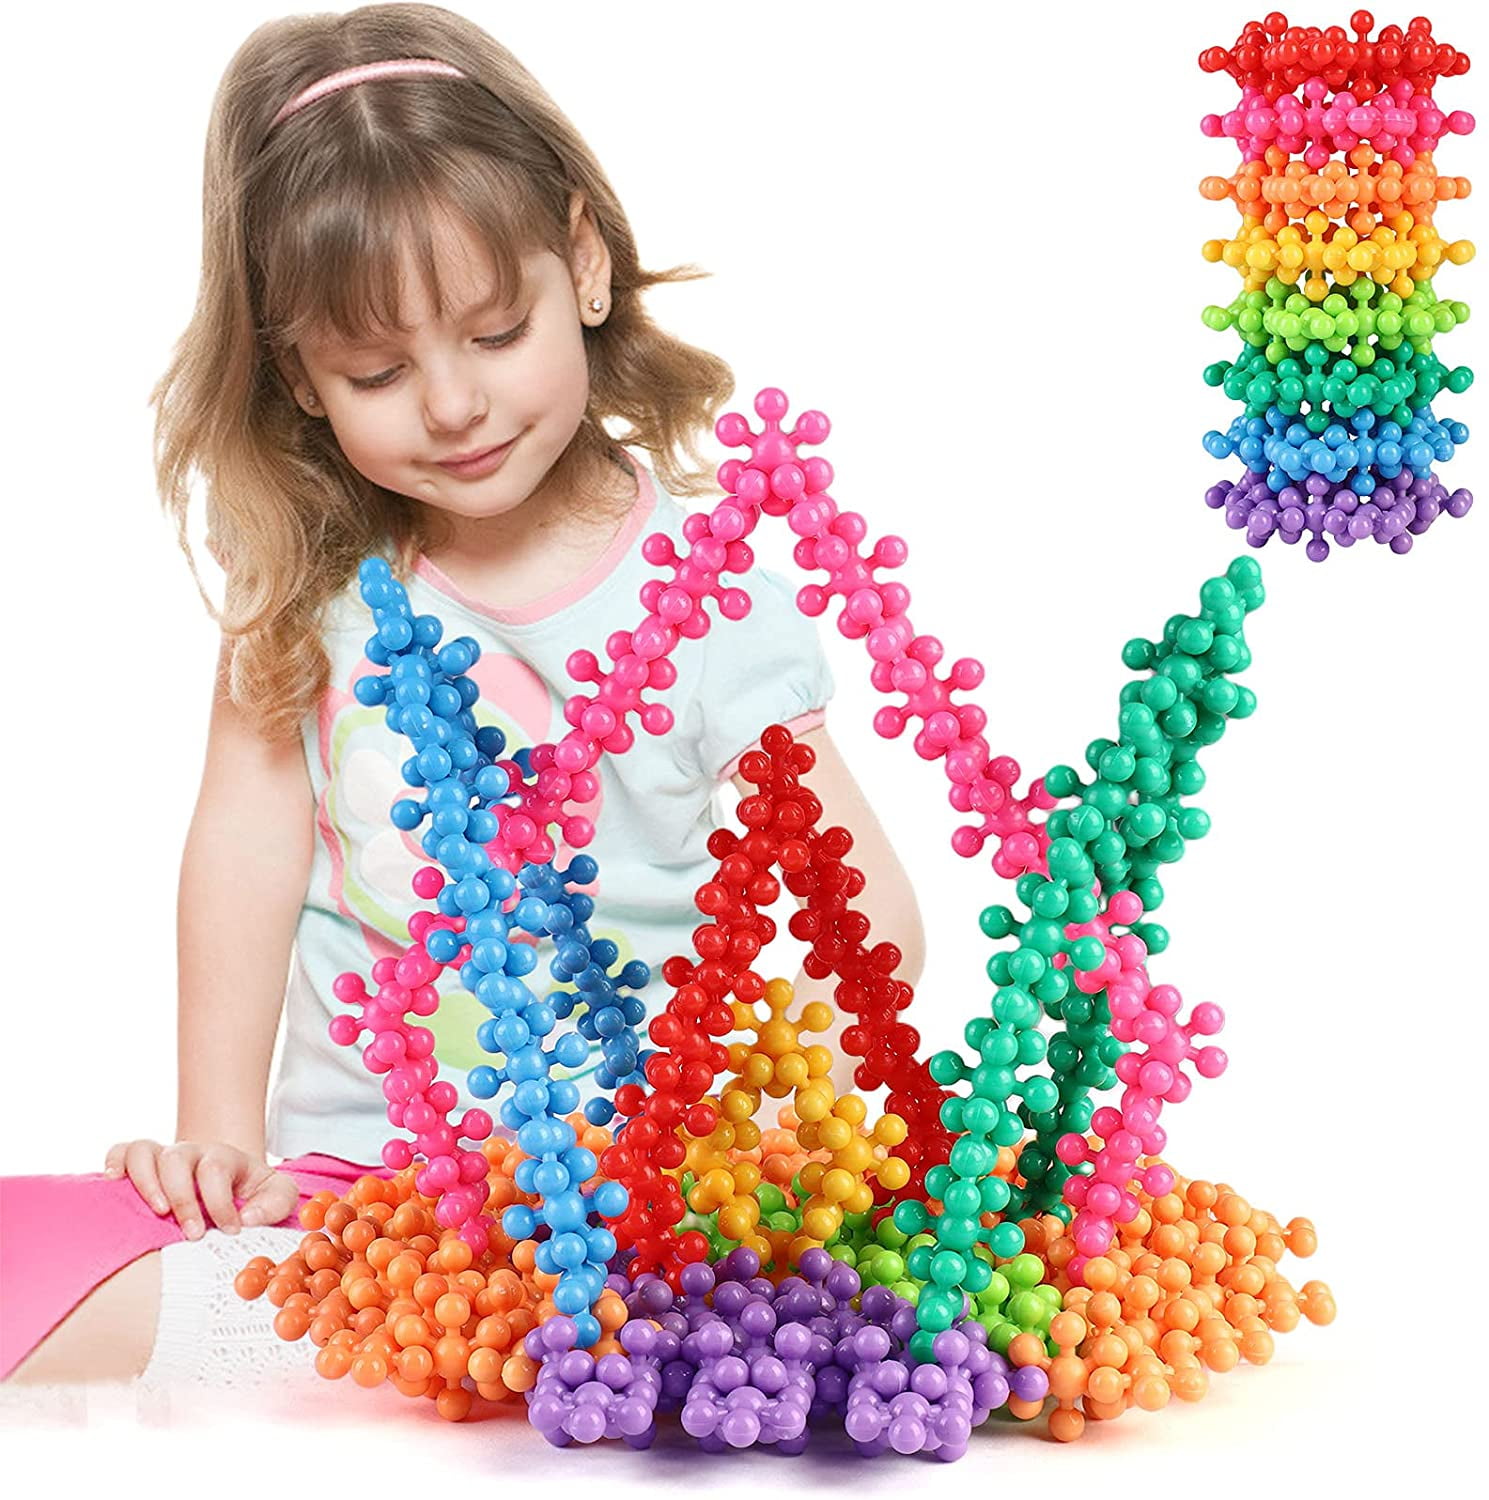 Color Kit 180 Pcs – wooden color kit for Kids – School Mall – Preschool  Supplies – Educational Toys